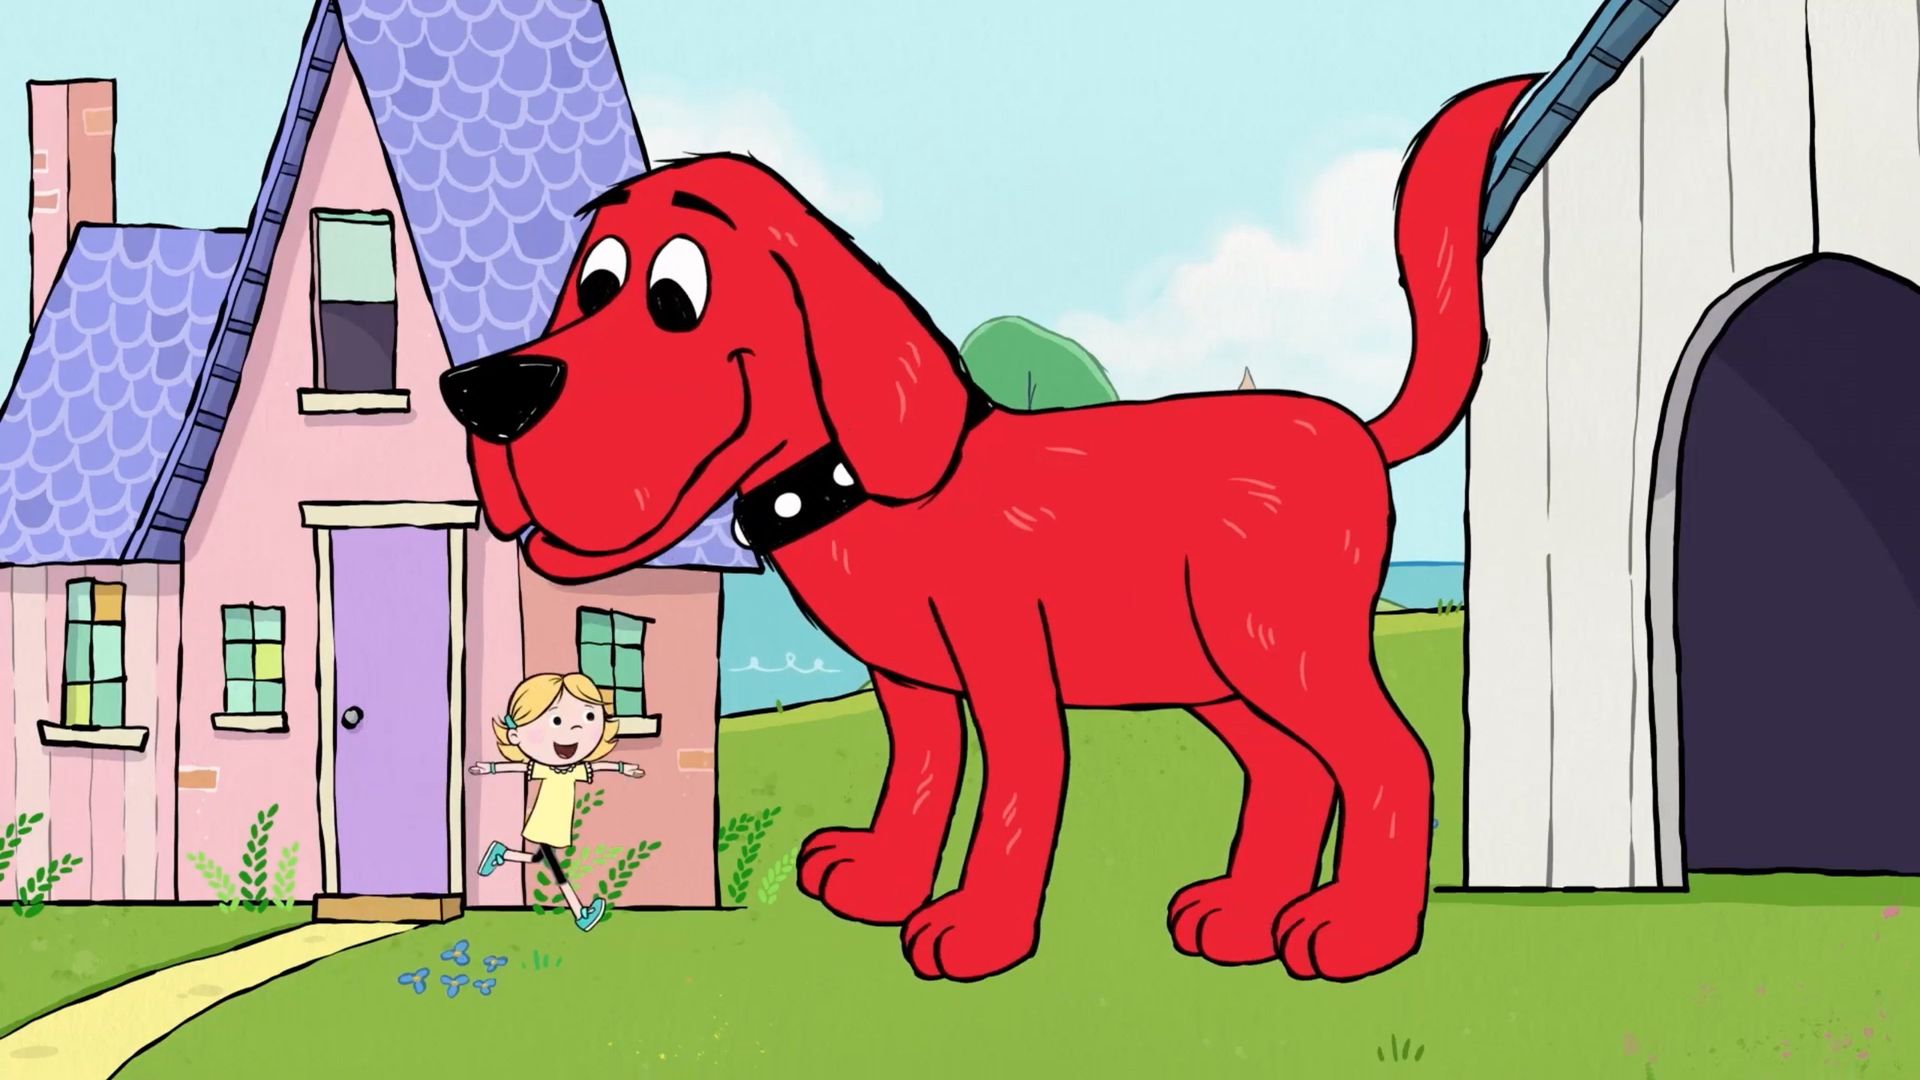 Clifford's Puppy Days (TV Series 2003–2006) - IMDb